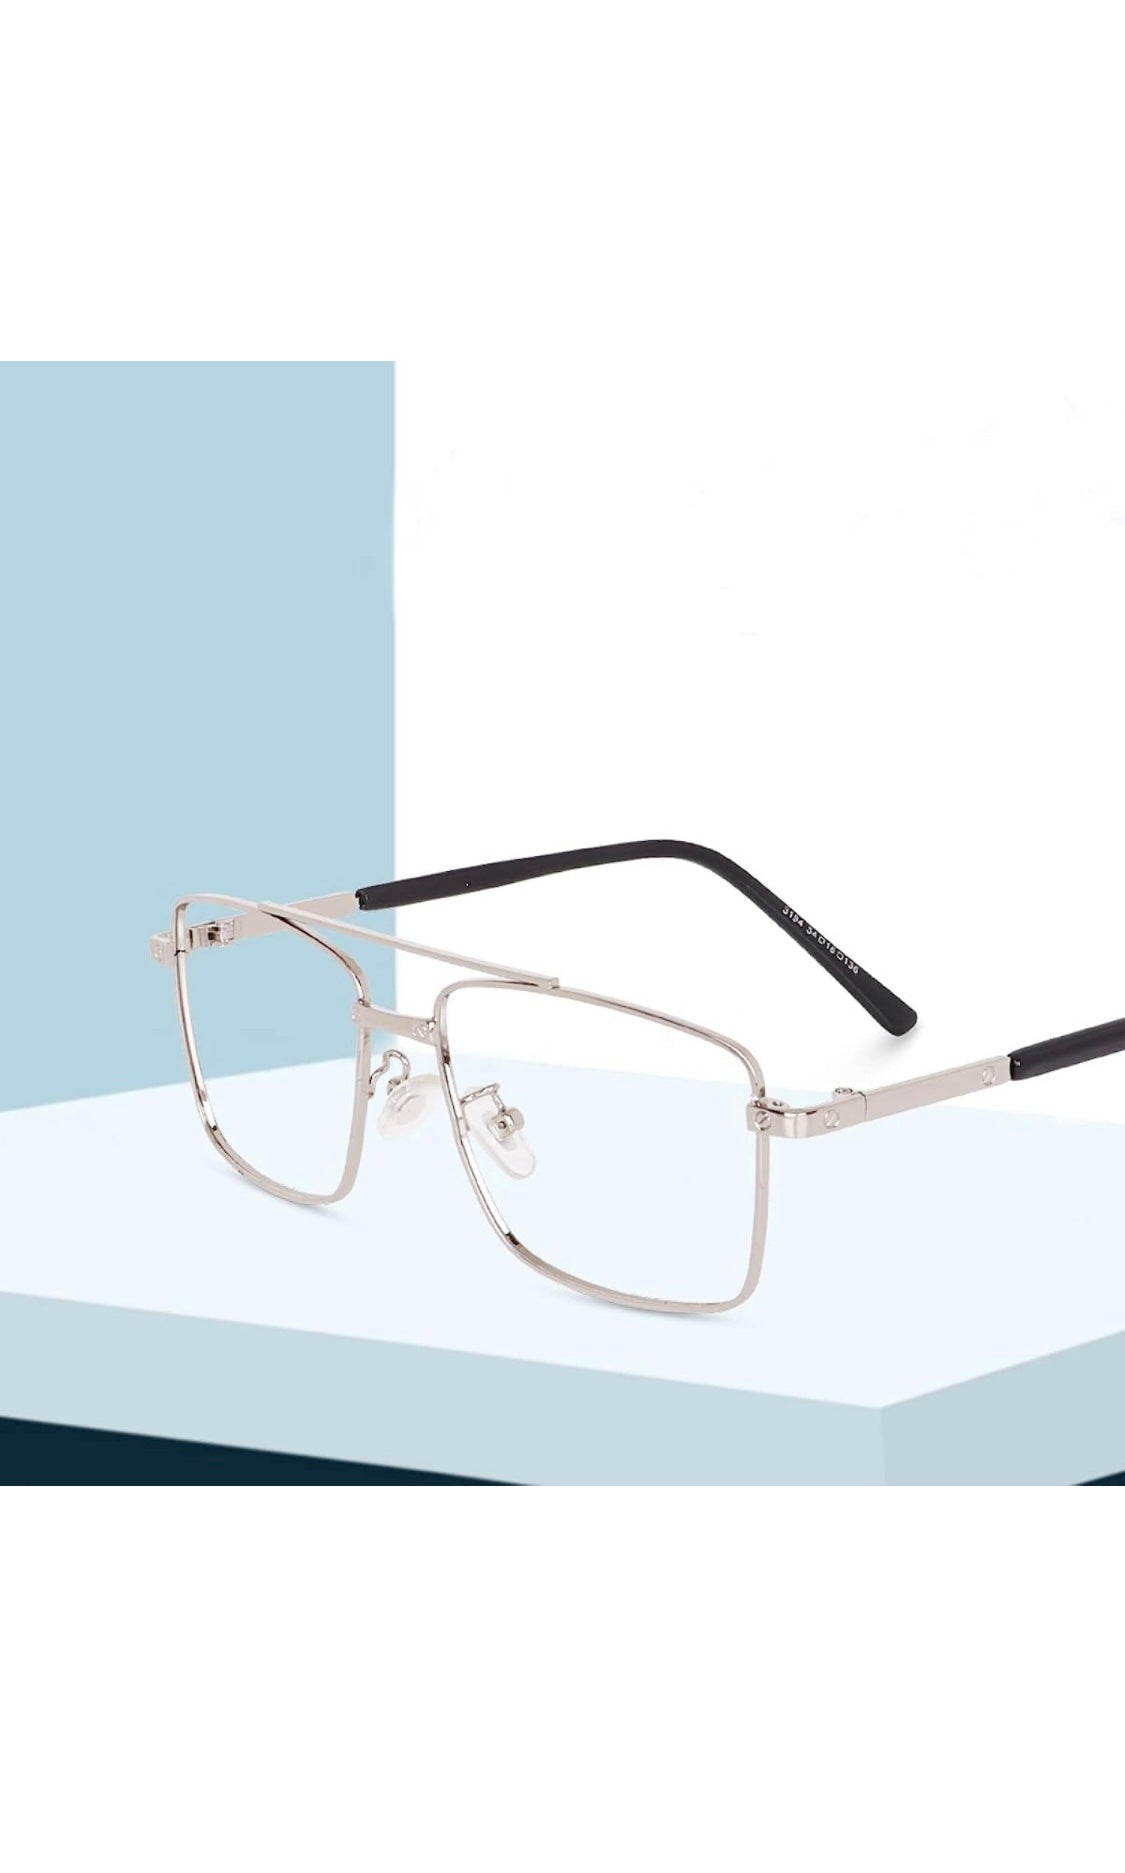 Jodykoes® New Full Rim Rectangular Blue Light Protection Computer Eyeglasses Metal Frame With Anti Glare and Blu Cut Glasses Spectacles for Men and Women Eyewear (Silver) - Jodykoes ®